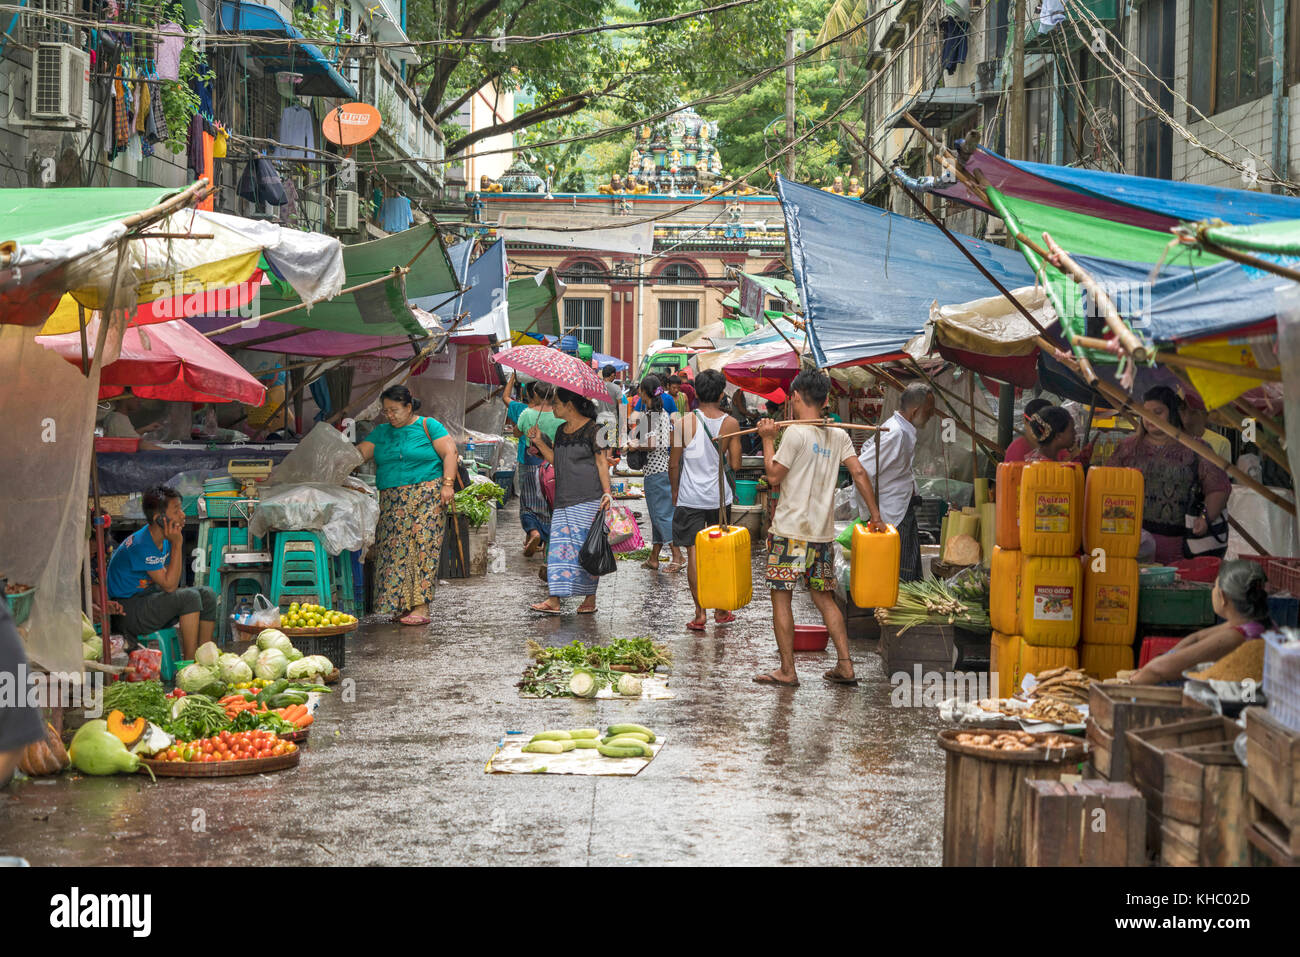 Strassen - Markt in Yangon oder Rangun, Myanmar , Asien | street market,  Yangon  or Rangoon, Myanmar, Asia Stock Photo